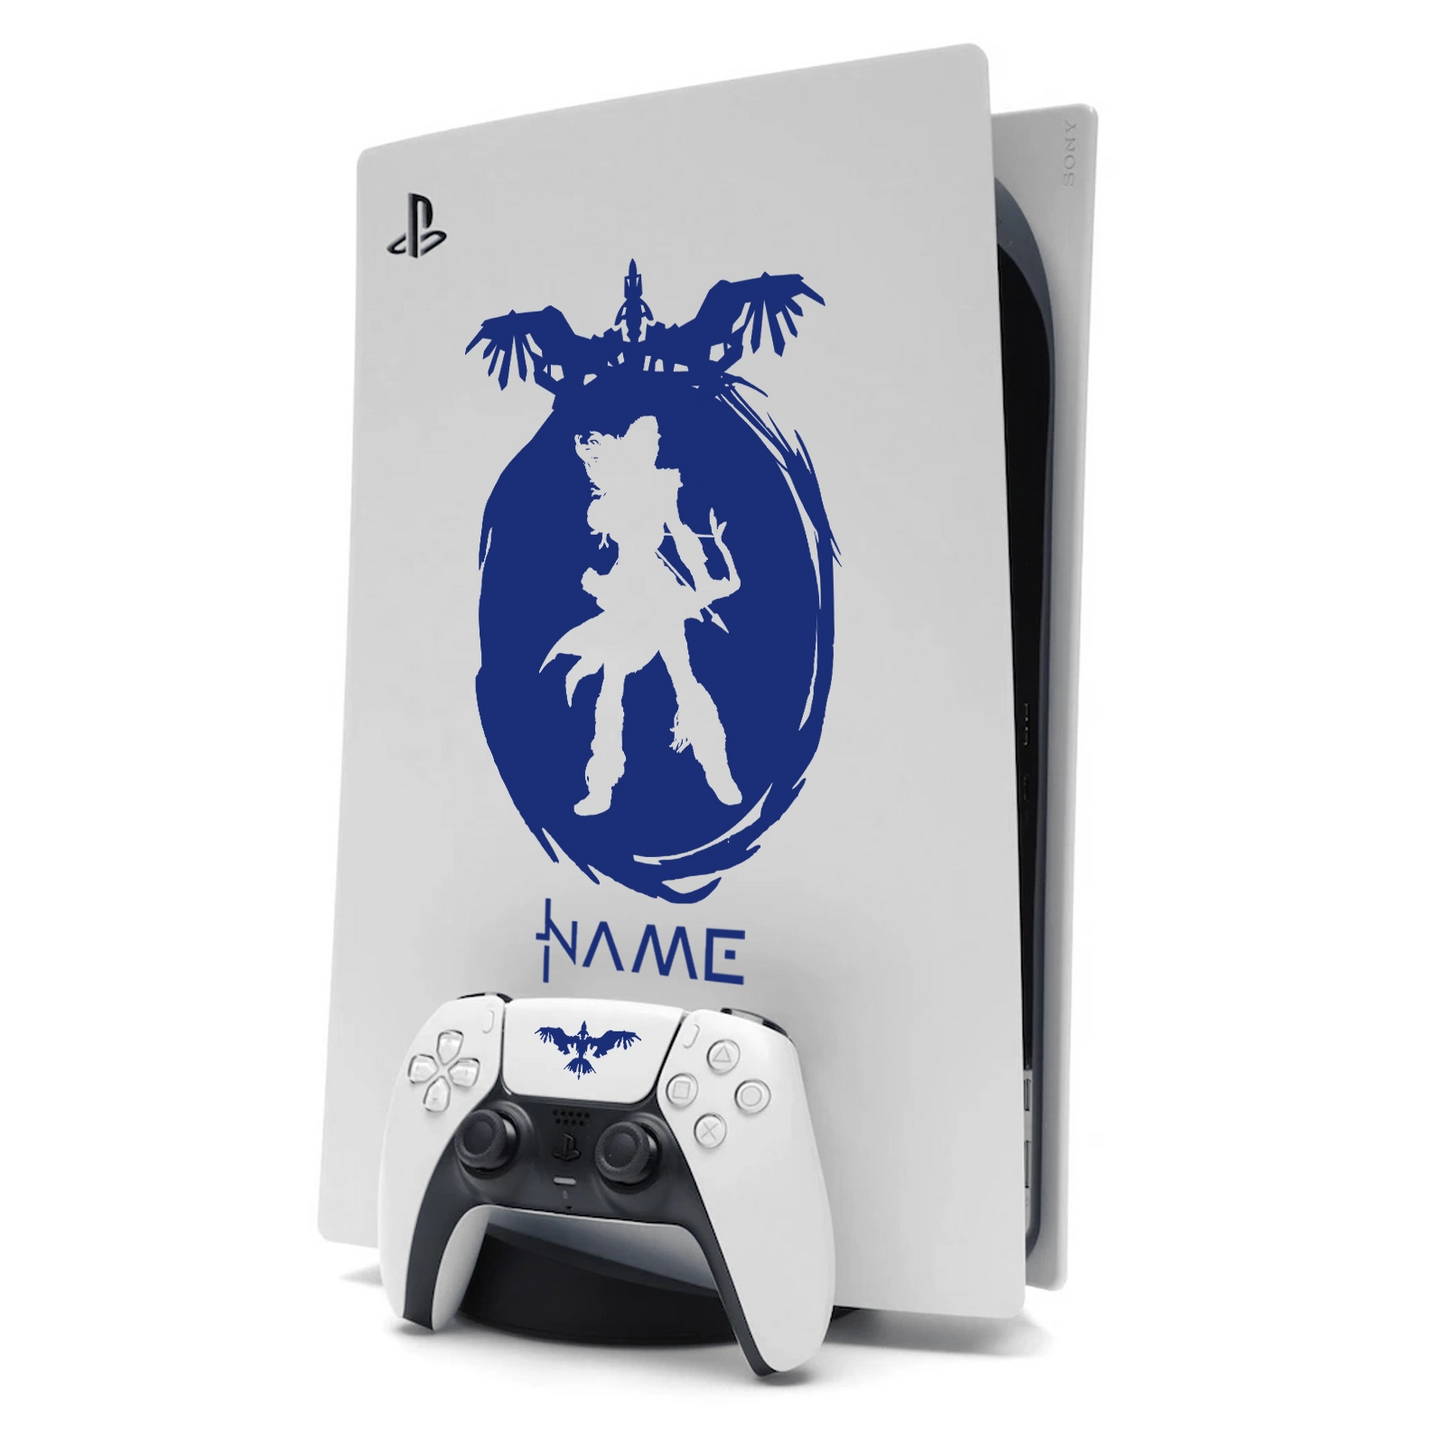 Horizon Aloy PS5 Sticker Skin for Playstation 5 in Dark Blue